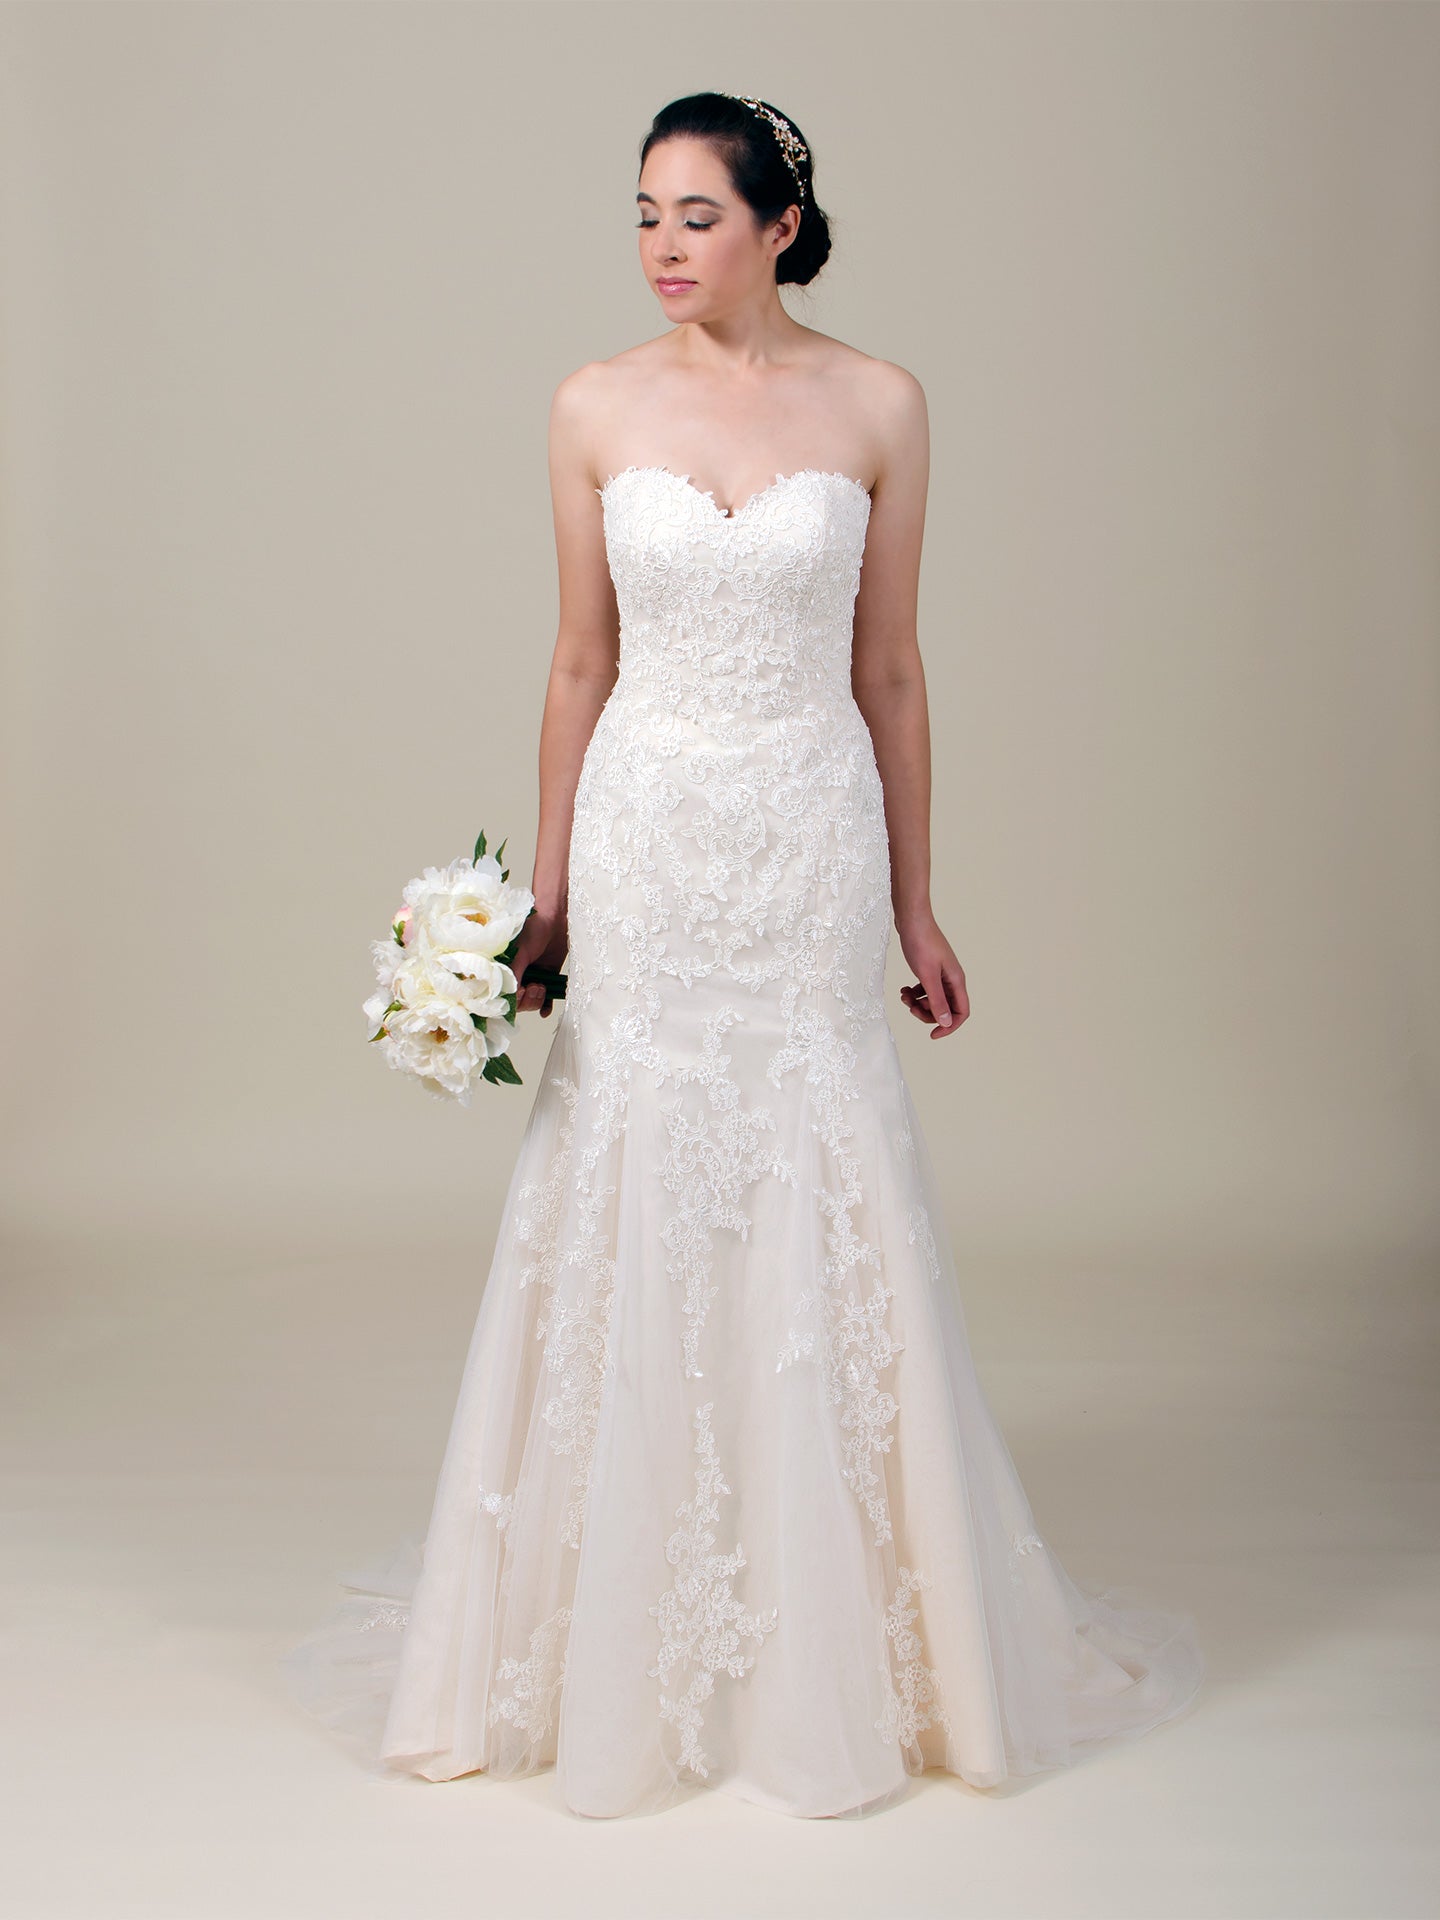 Strapless lace wedding dress 4063